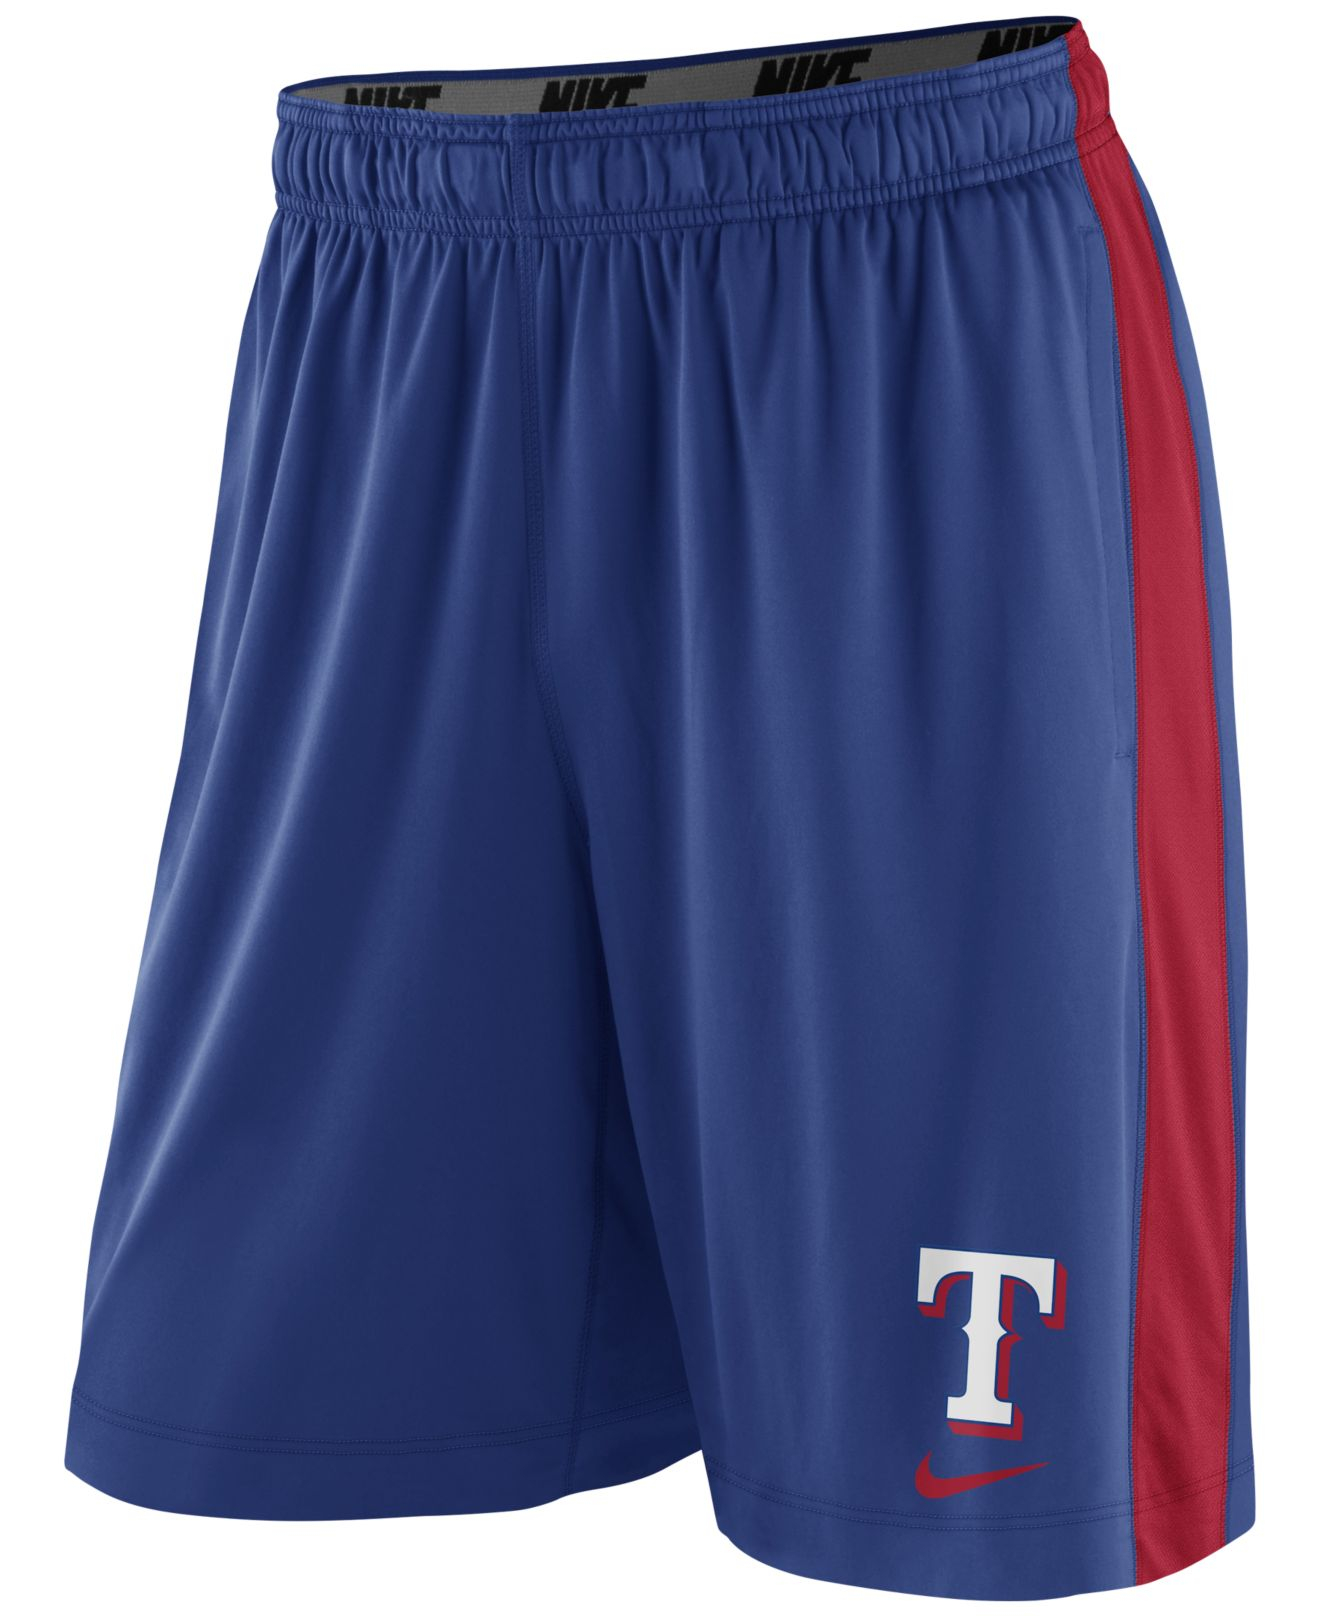 Lyst - Nike Men's Texas Rangers Fly Dri-fit Shorts in Blue for Men